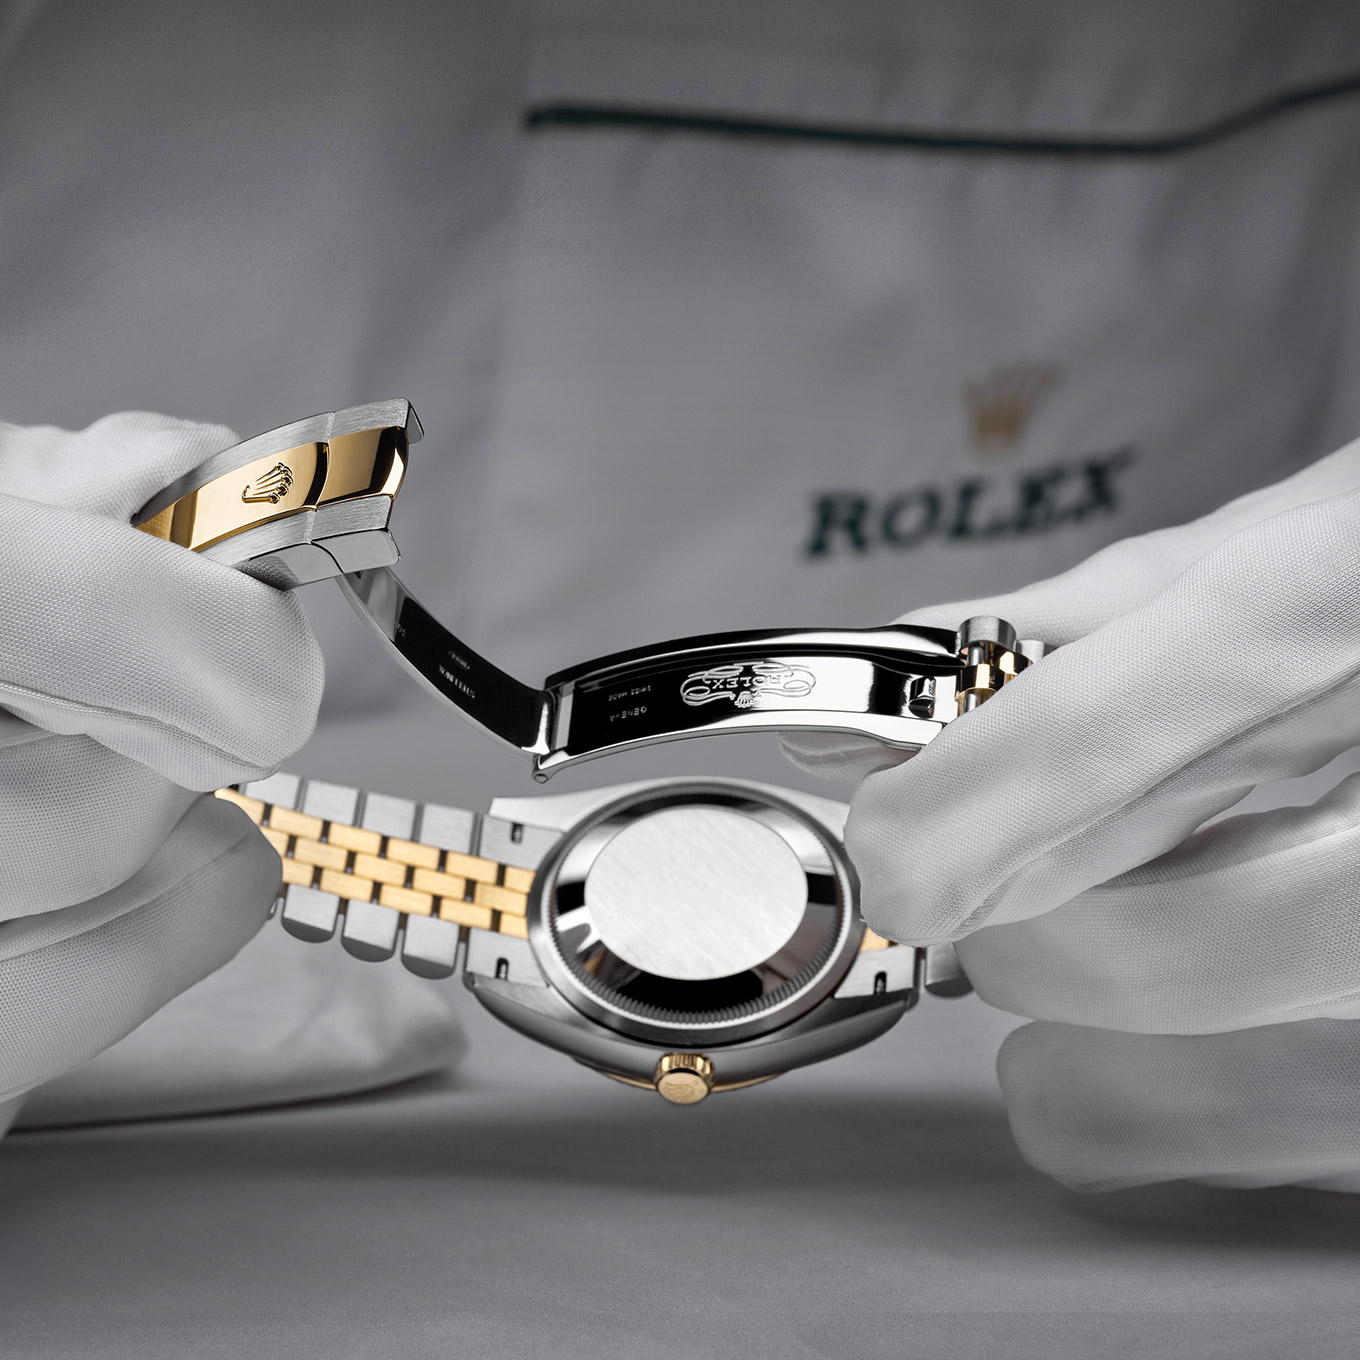 Rolex servicing at Davis Jewelers in Louisville, KY